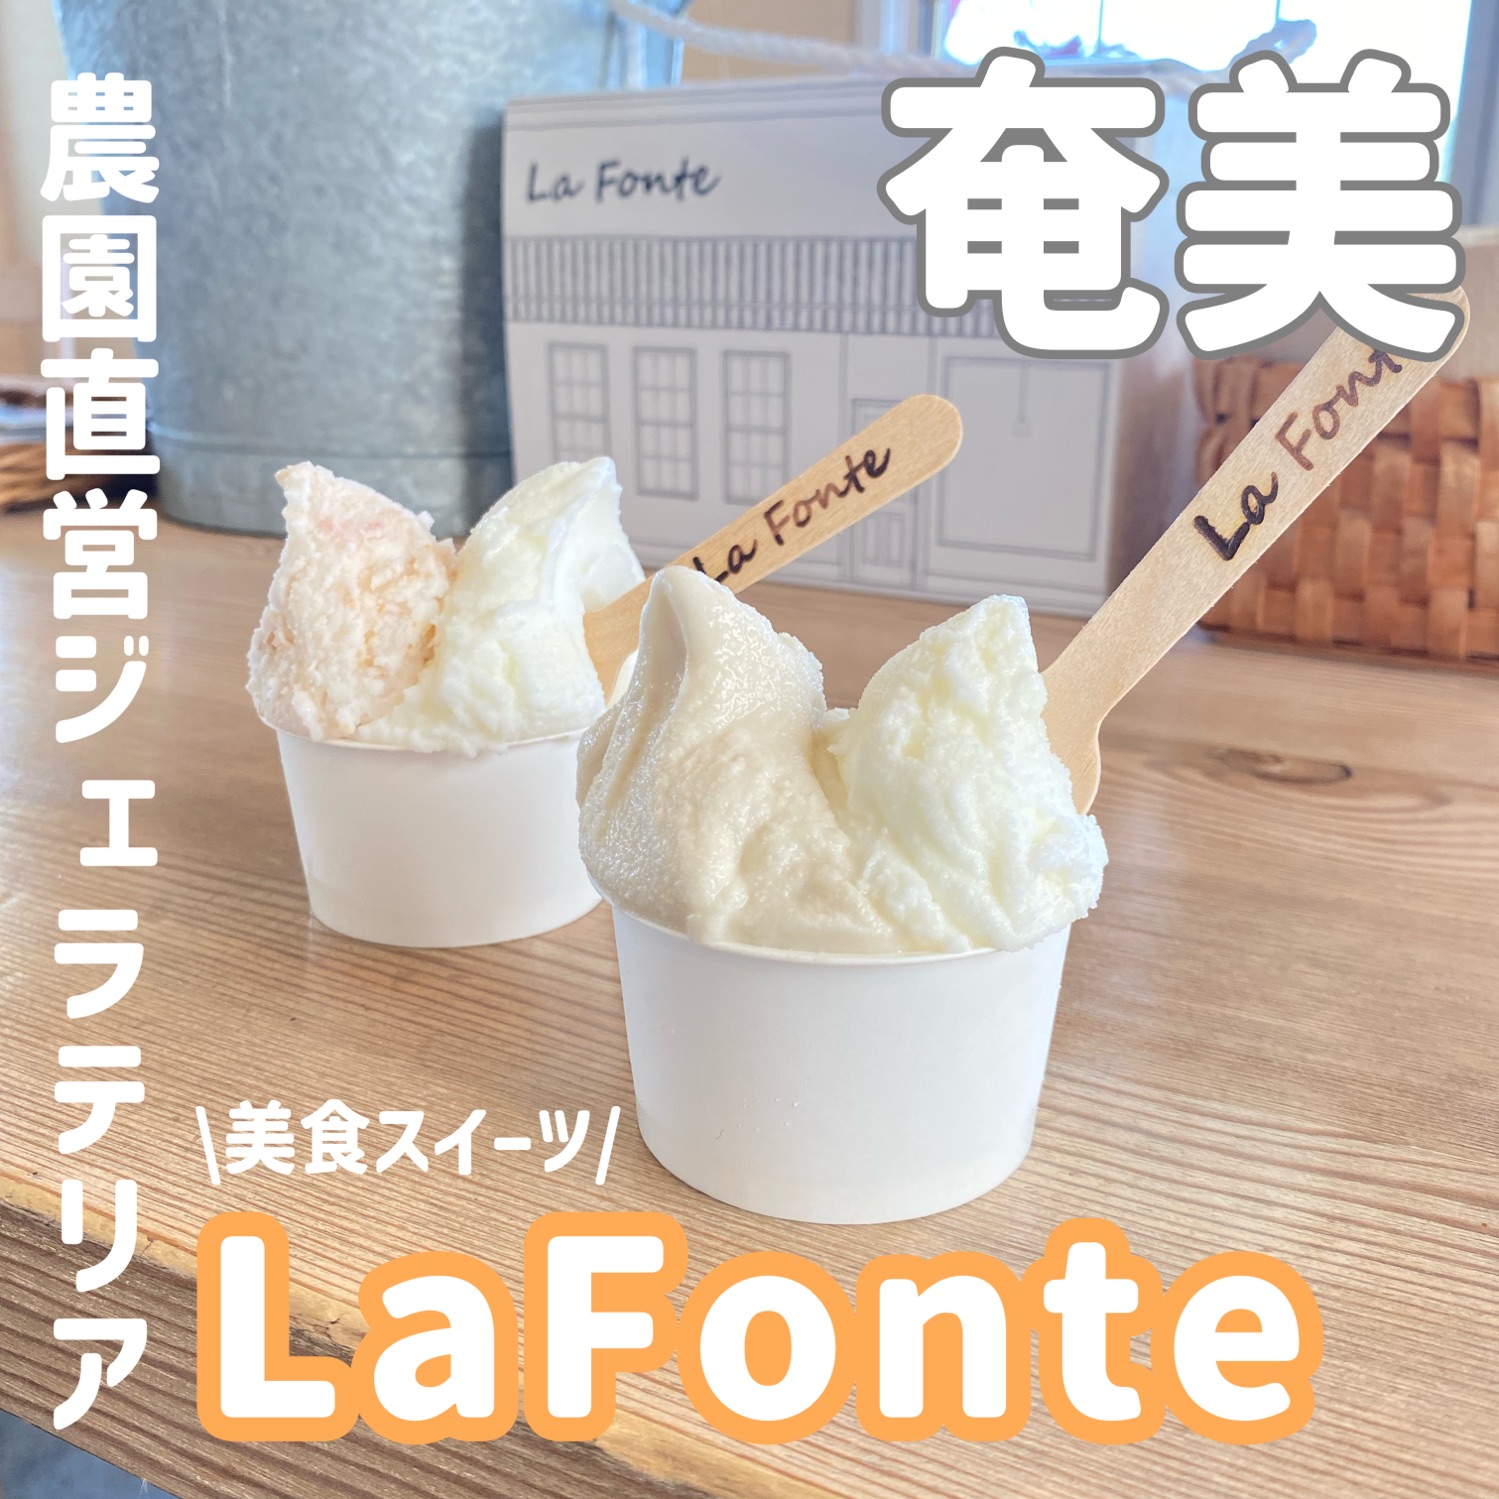 吃奄美“La Fonte”美食冰淇淋